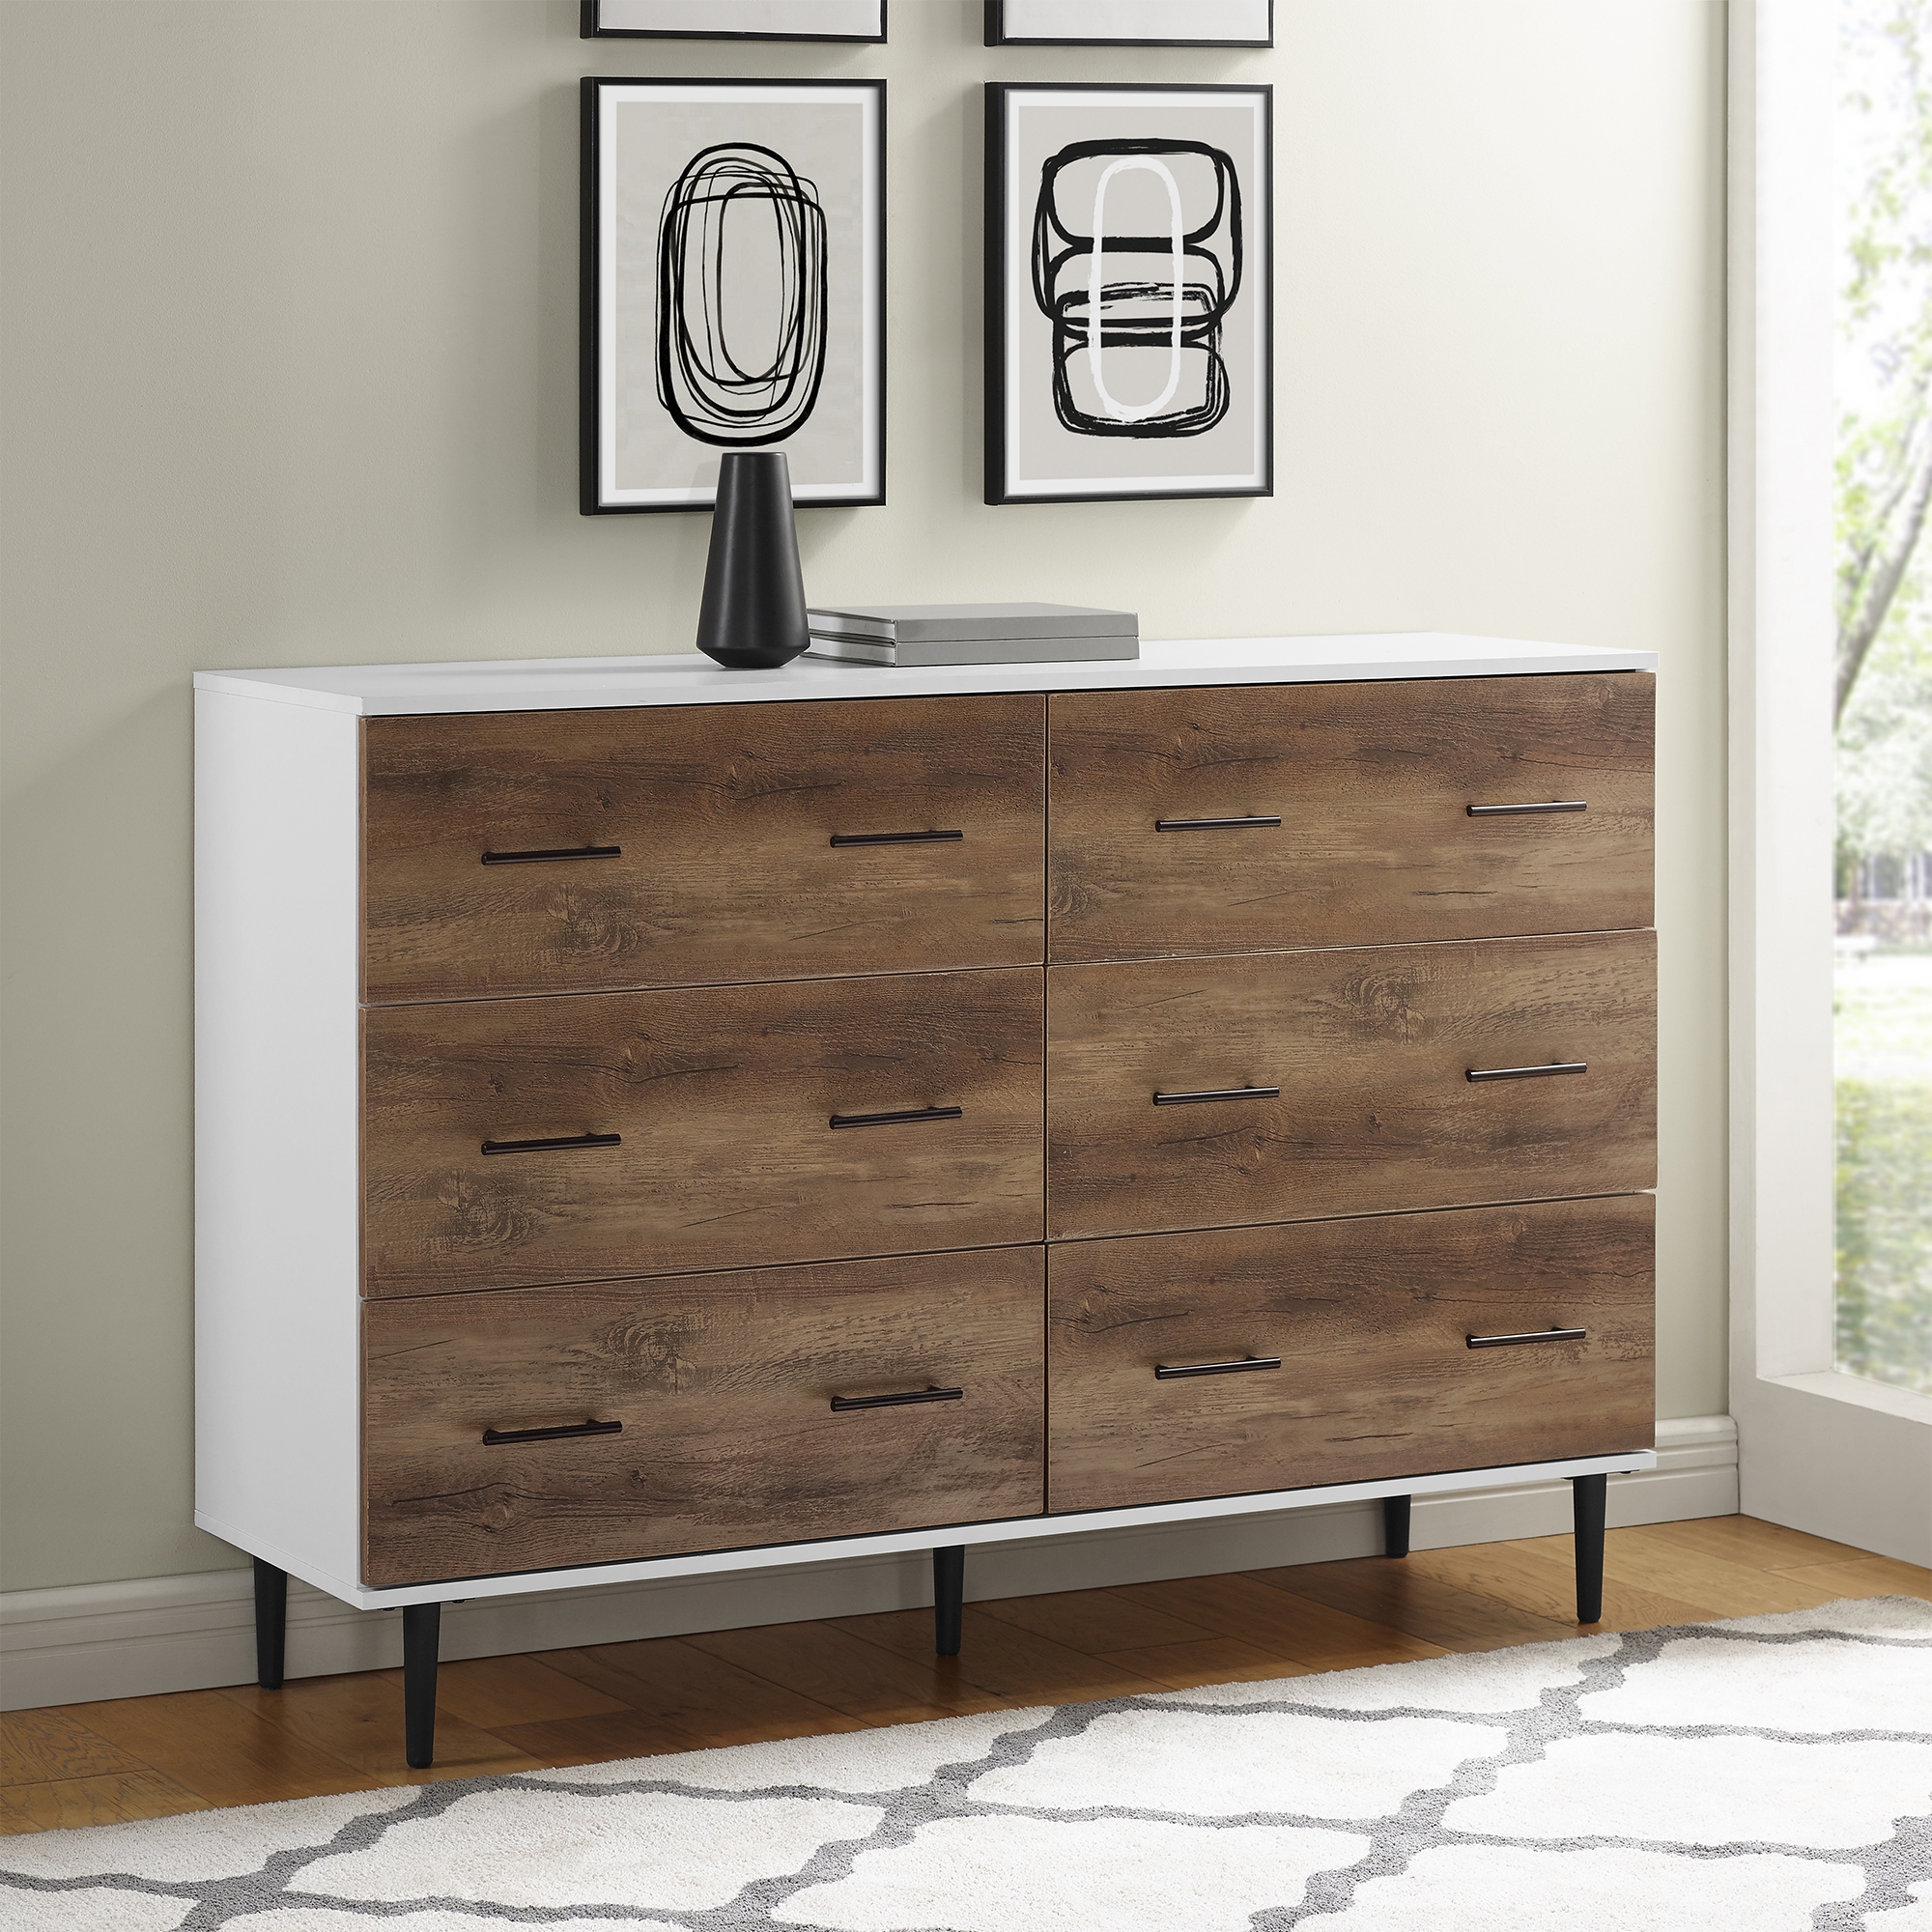 Savanna Modern Wood 6 Drawer Dresser - White/Rustic Oak - Image 3